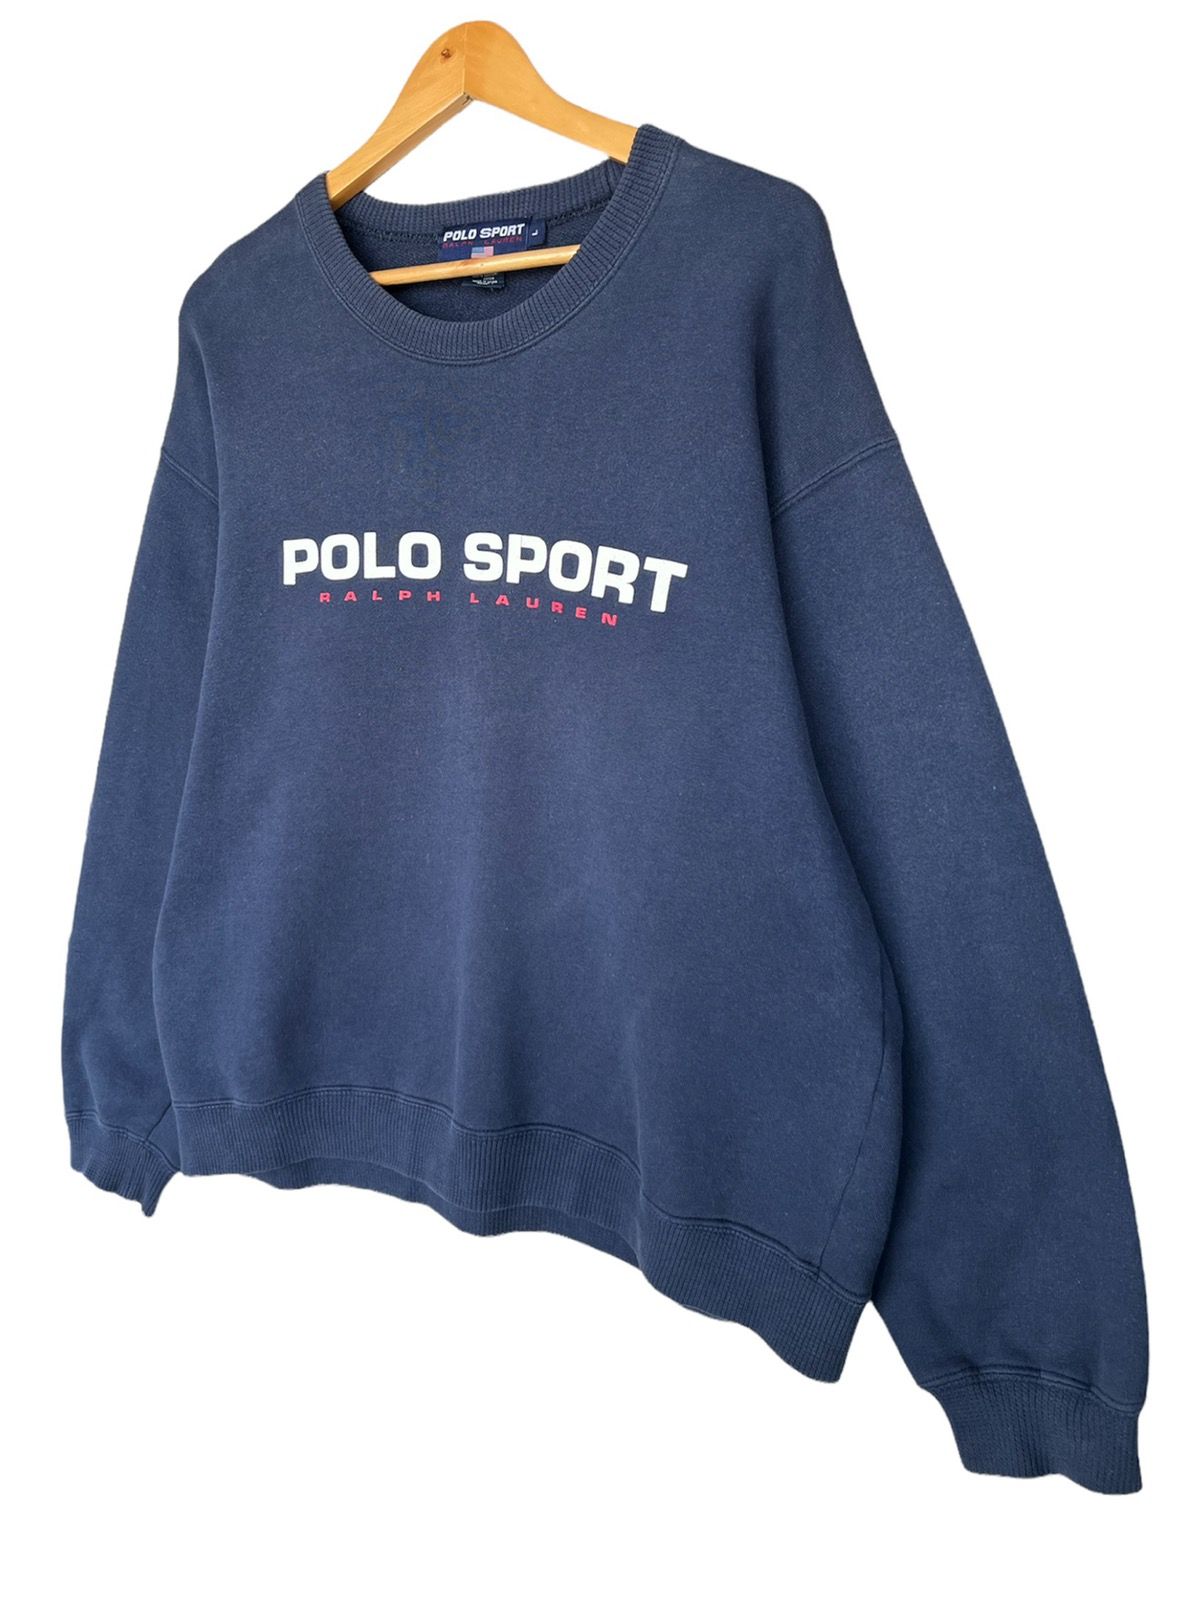 Polo Ralph Lauren - Vintage Polo Sport Ralph Lauren Spellout Sweatshirt Large - 2